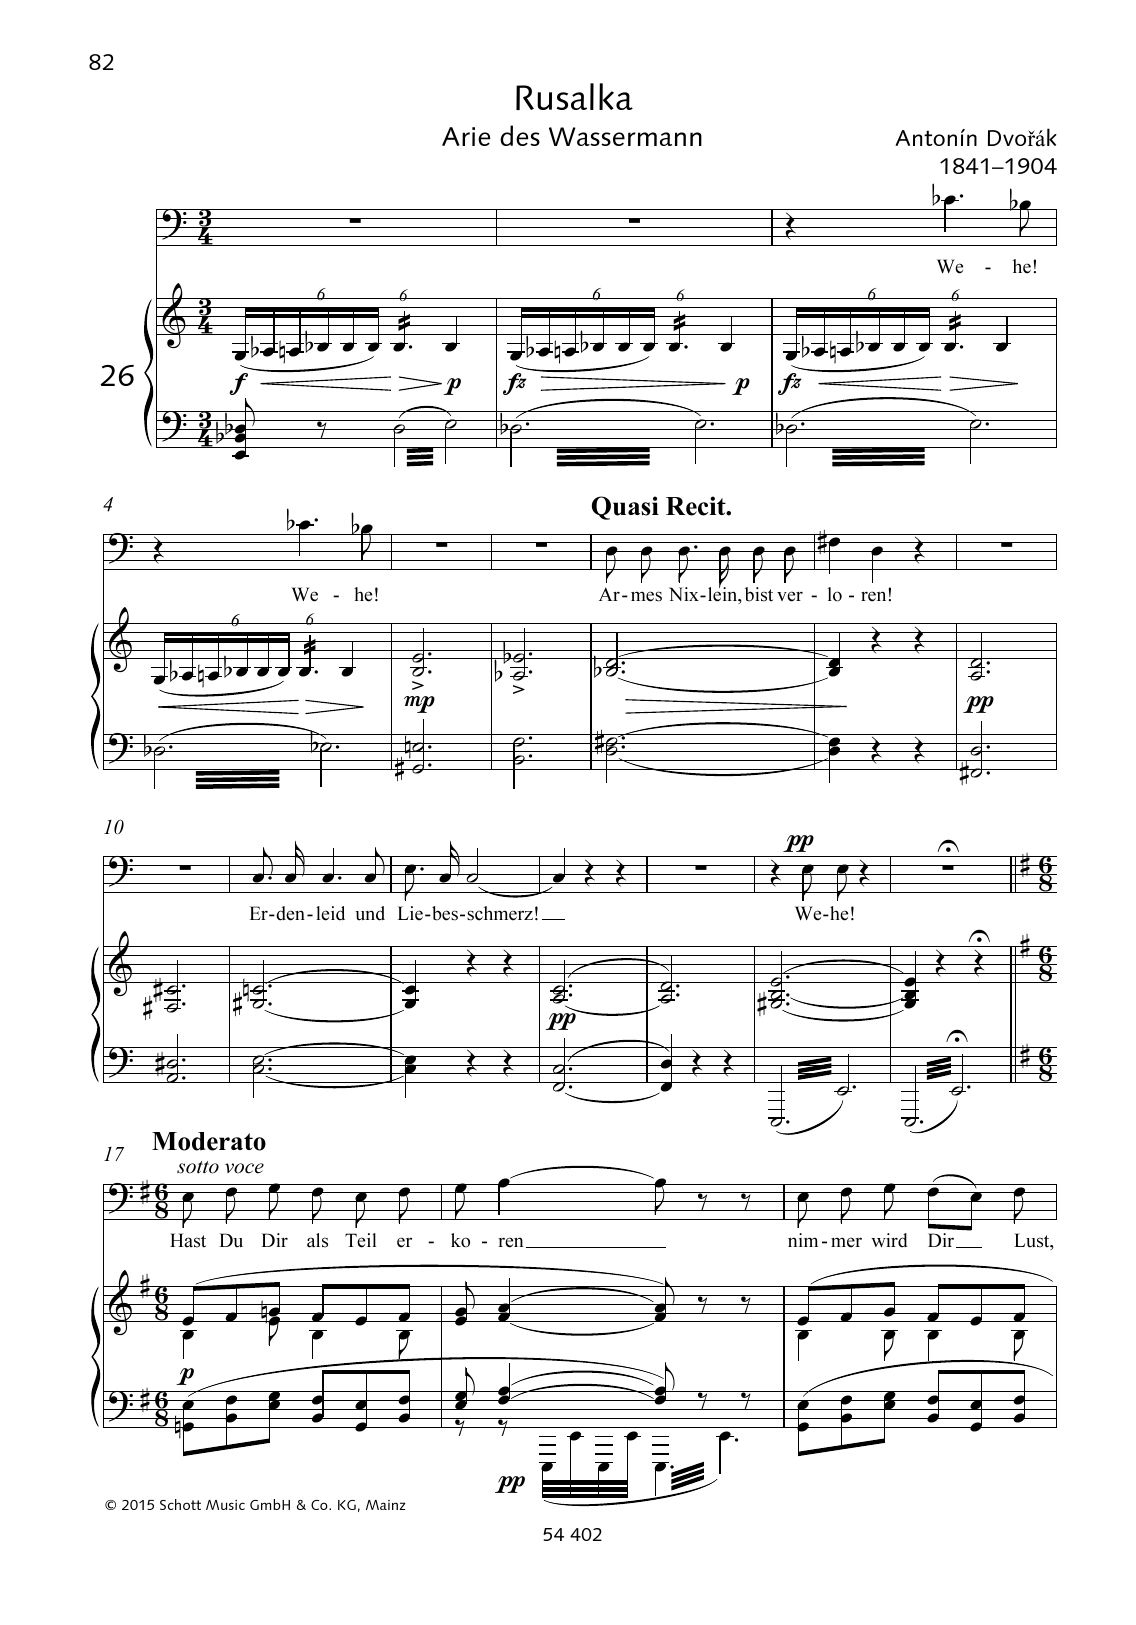 Antonín Dvorák Wehe! Wehe! Armes Nixlein, bist verloren Sheet Music Notes & Chords for Piano & Vocal - Download or Print PDF